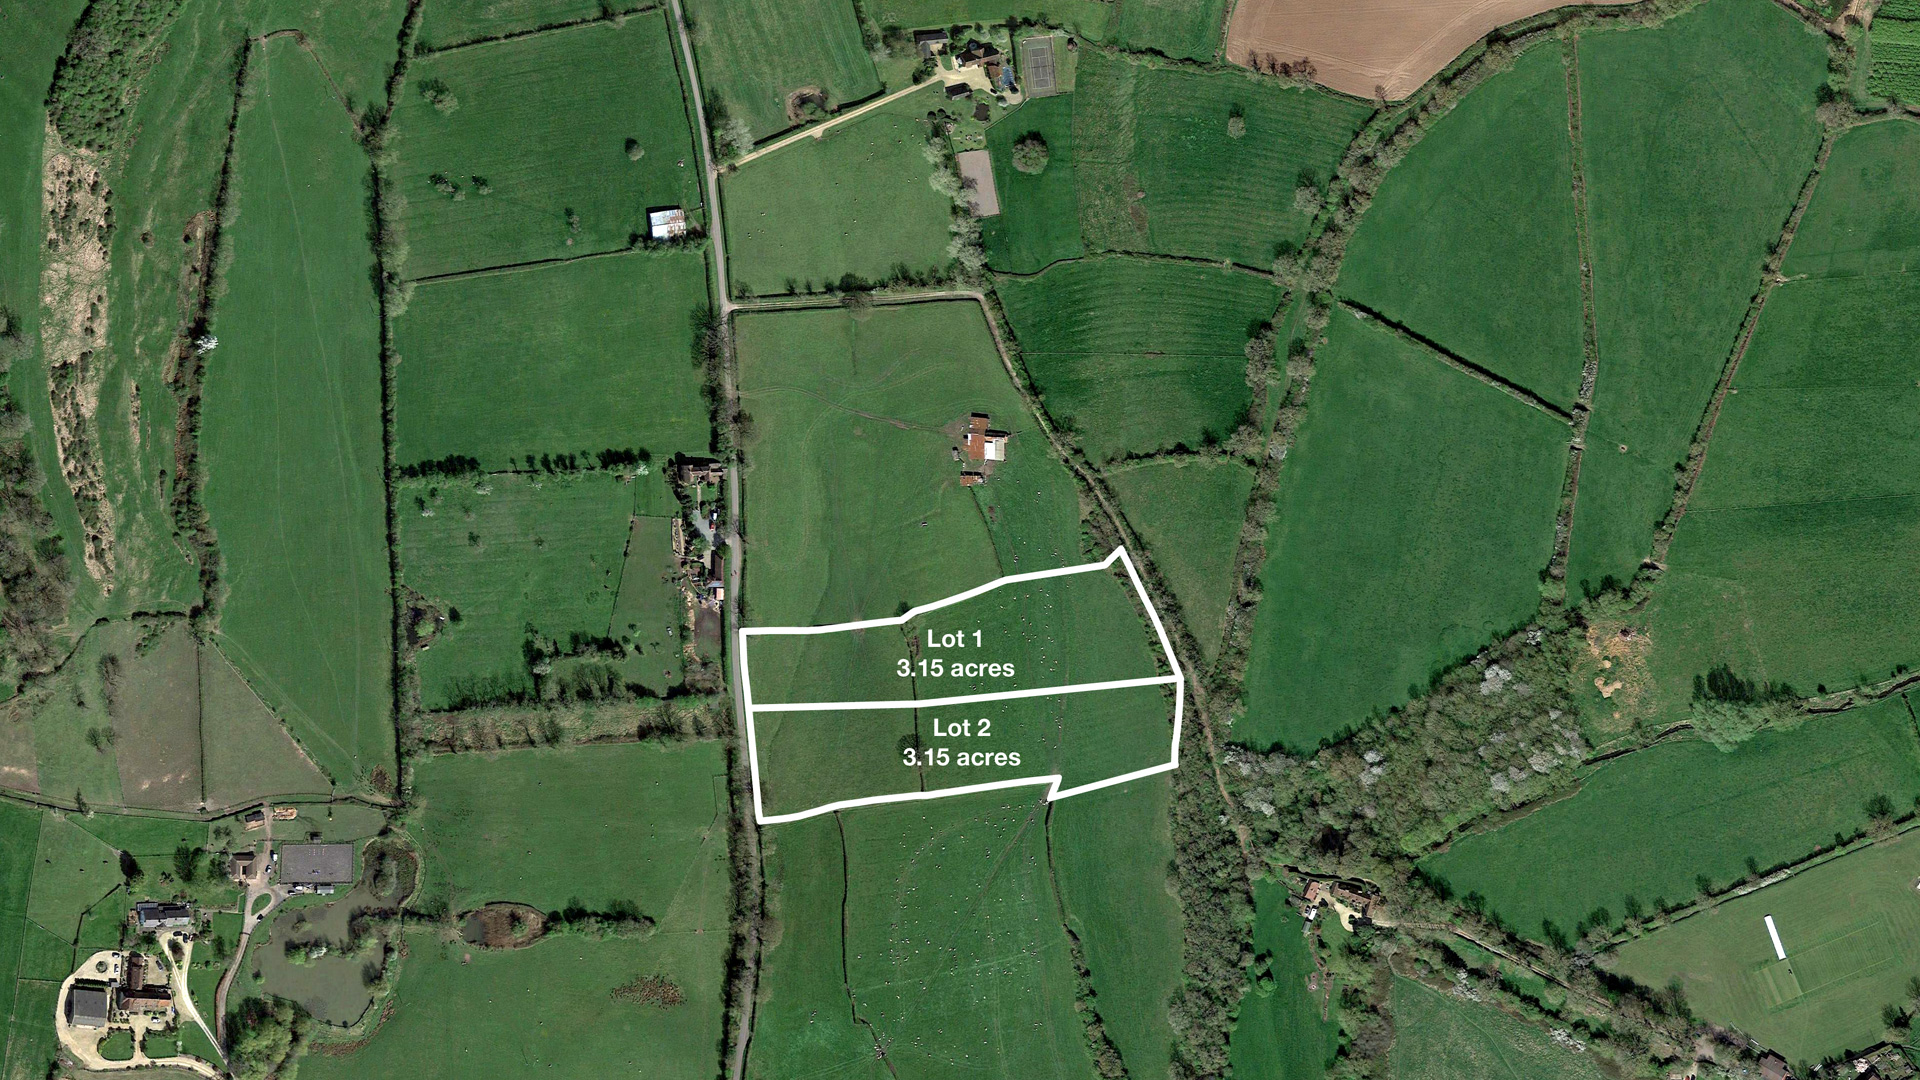 Land for sale at Berrowhill View in Feckenham, Redditch